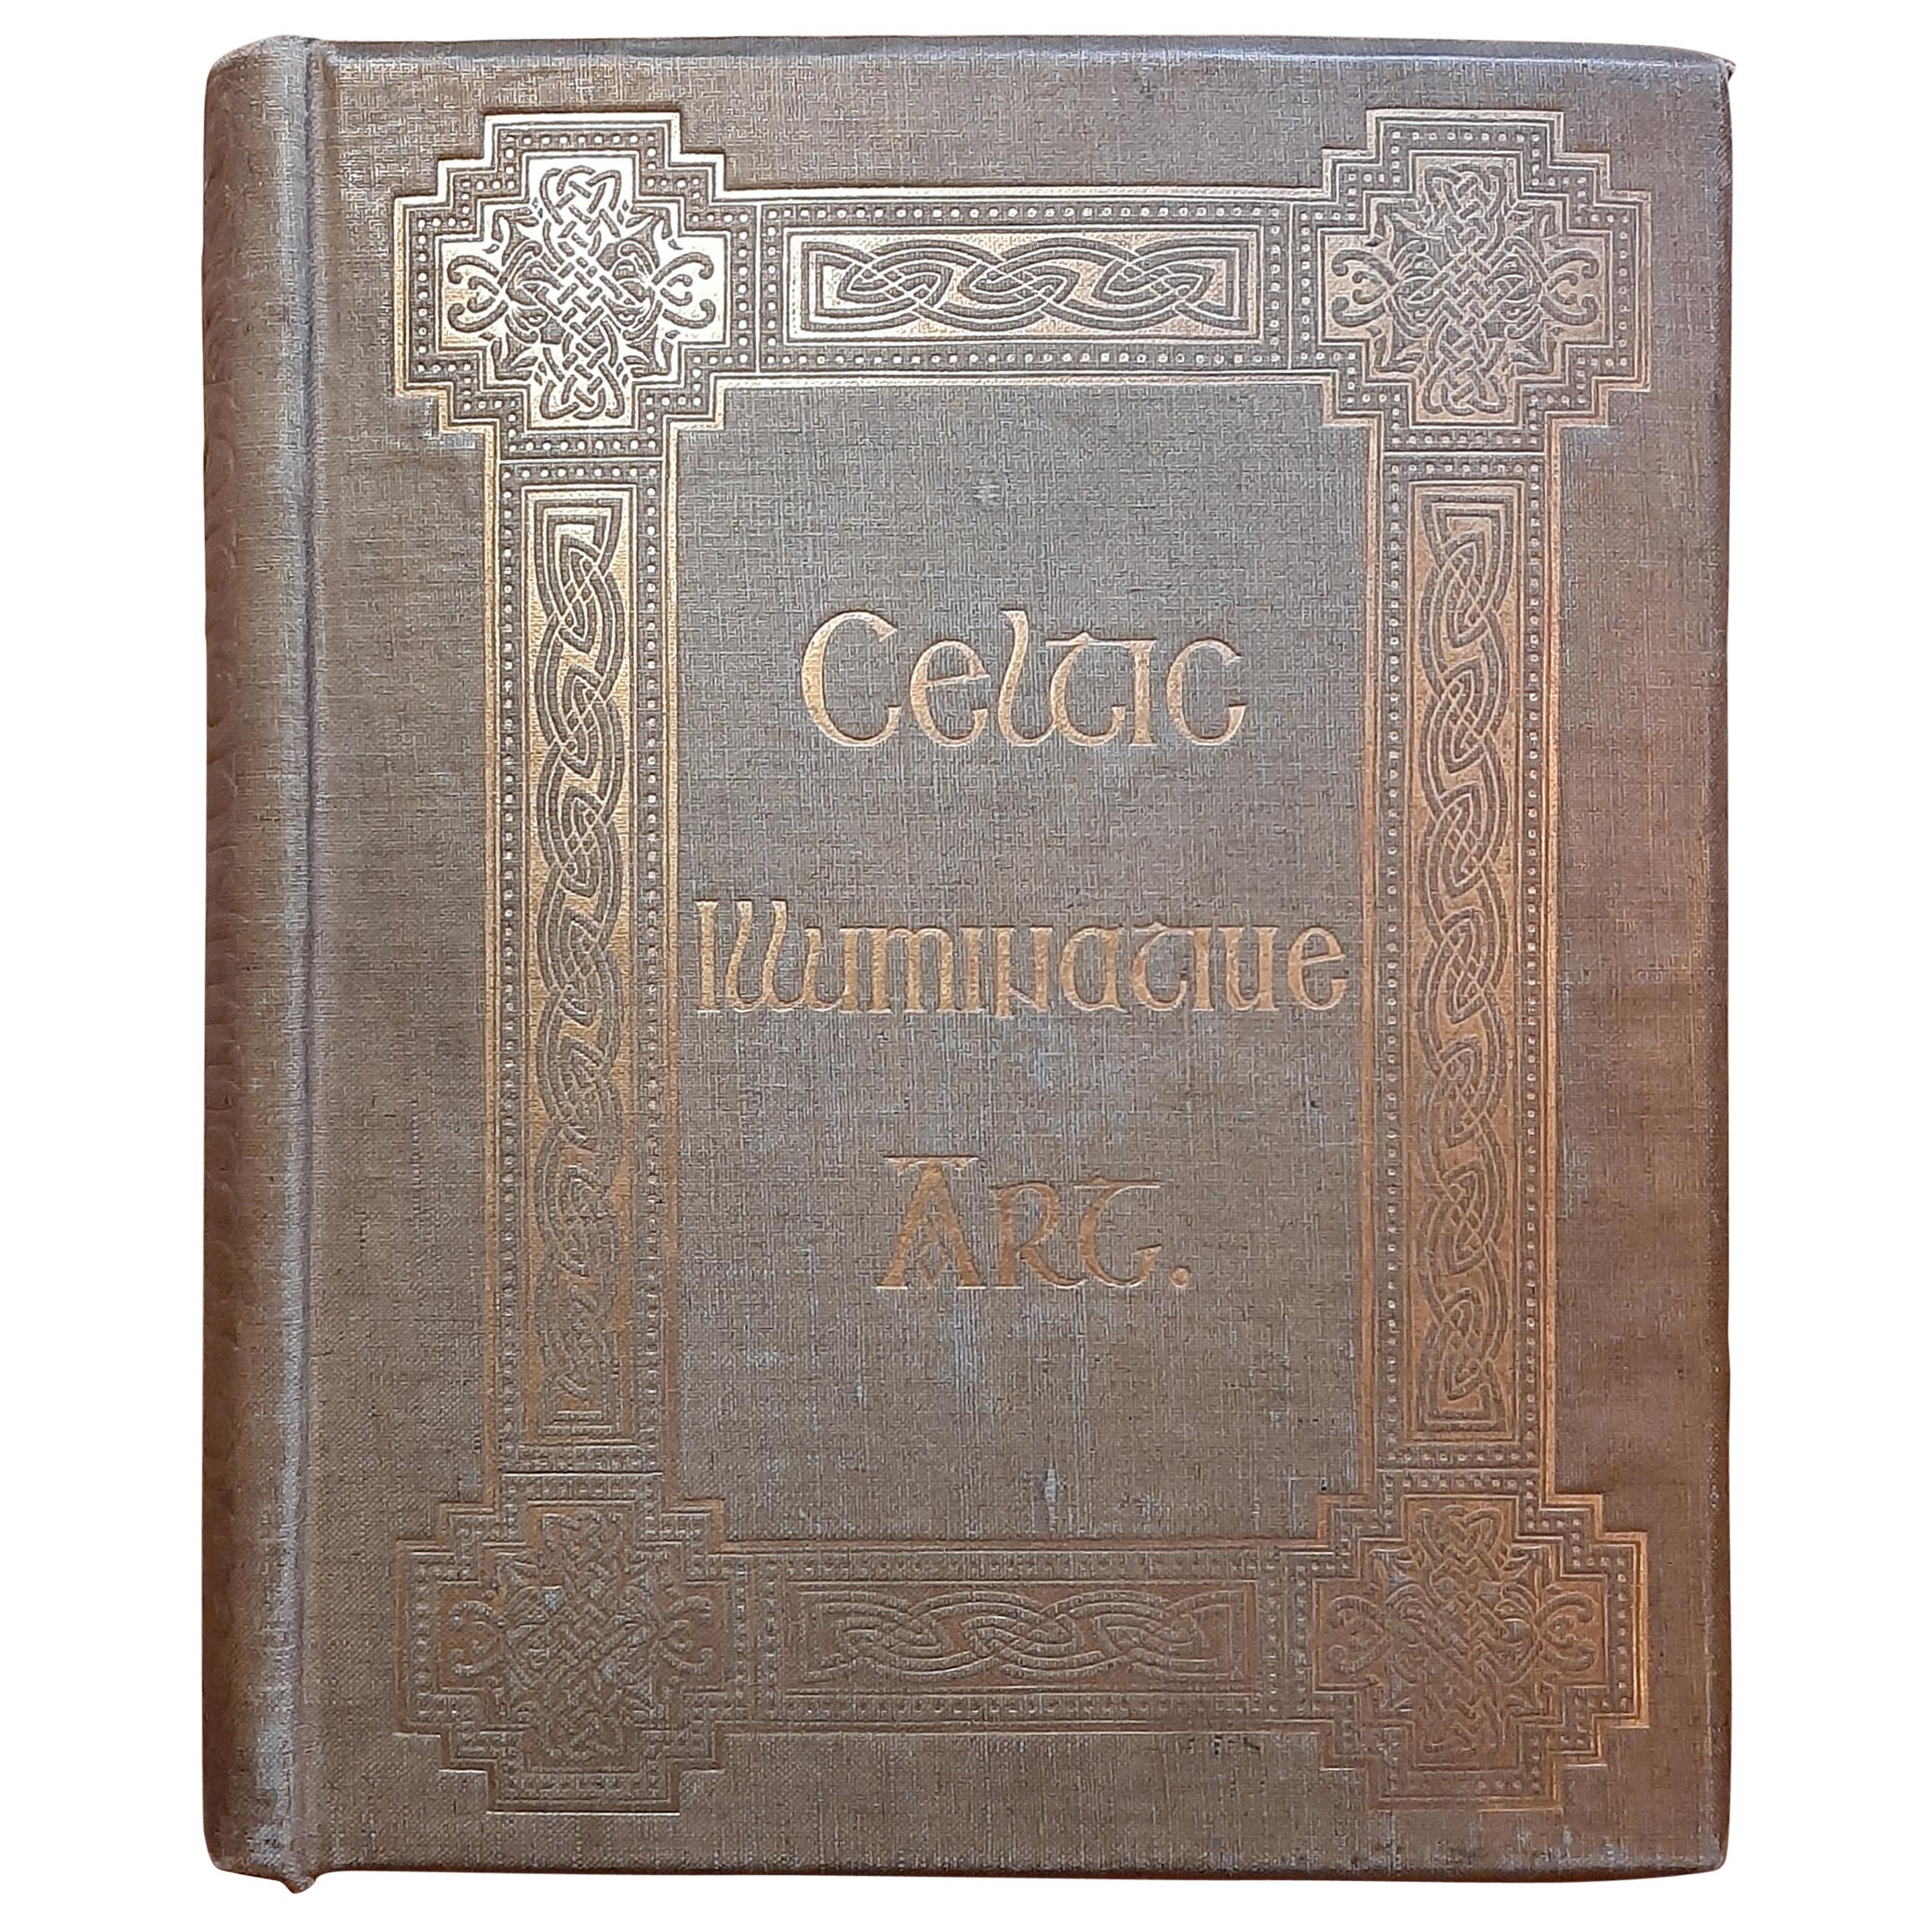 Celtic Illuminative Art by Rev. Stanford F.H. Robinson, '1908'